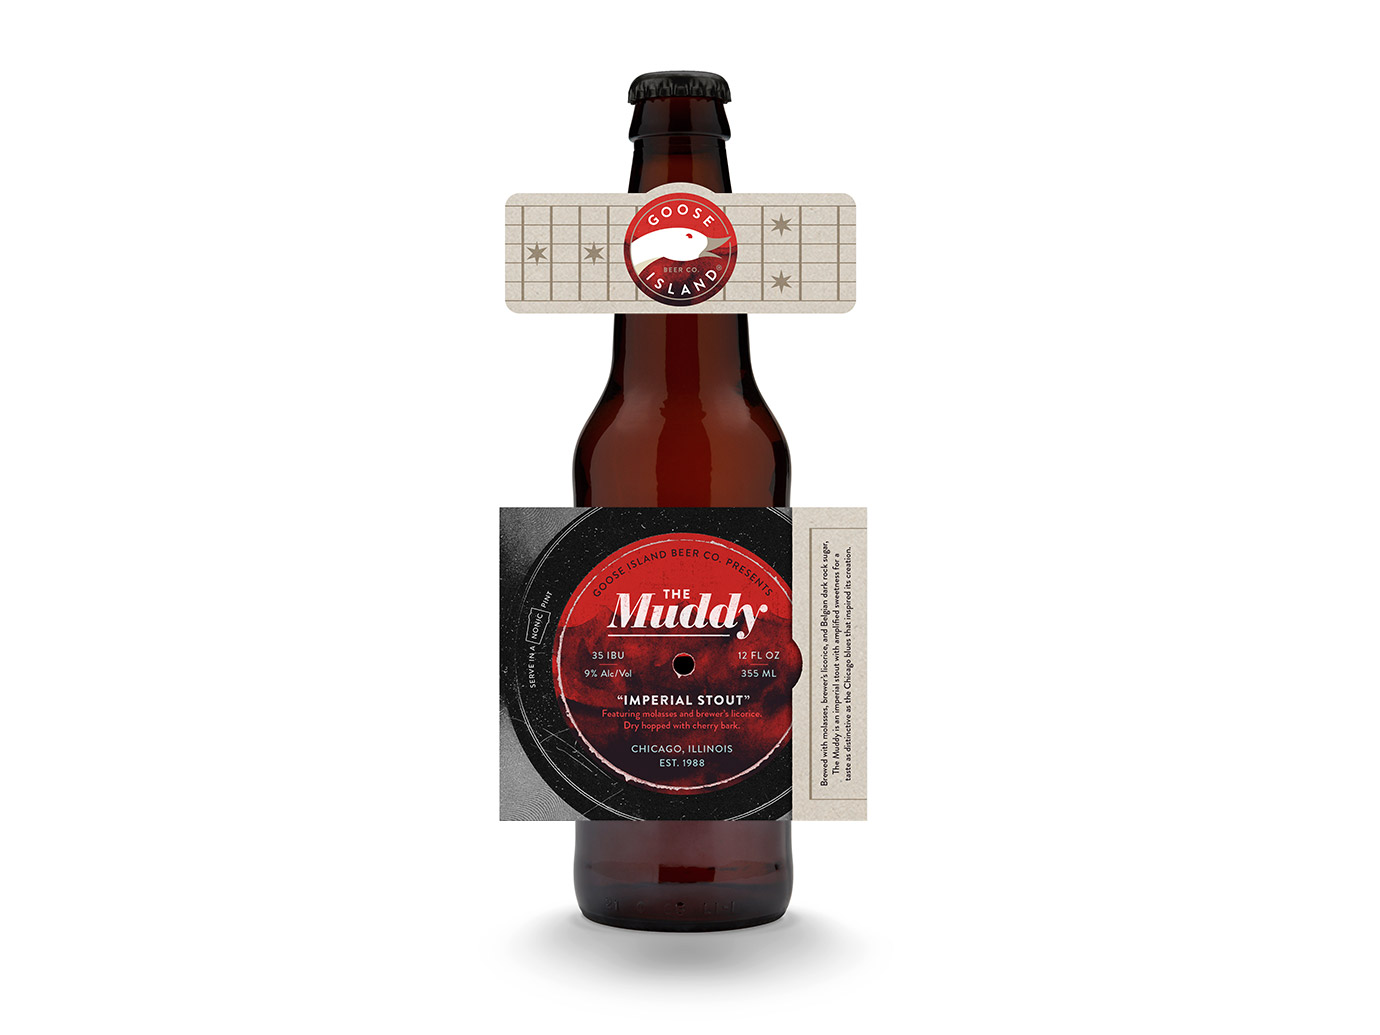 Goose Island Beer Co., The Muddy Packaging